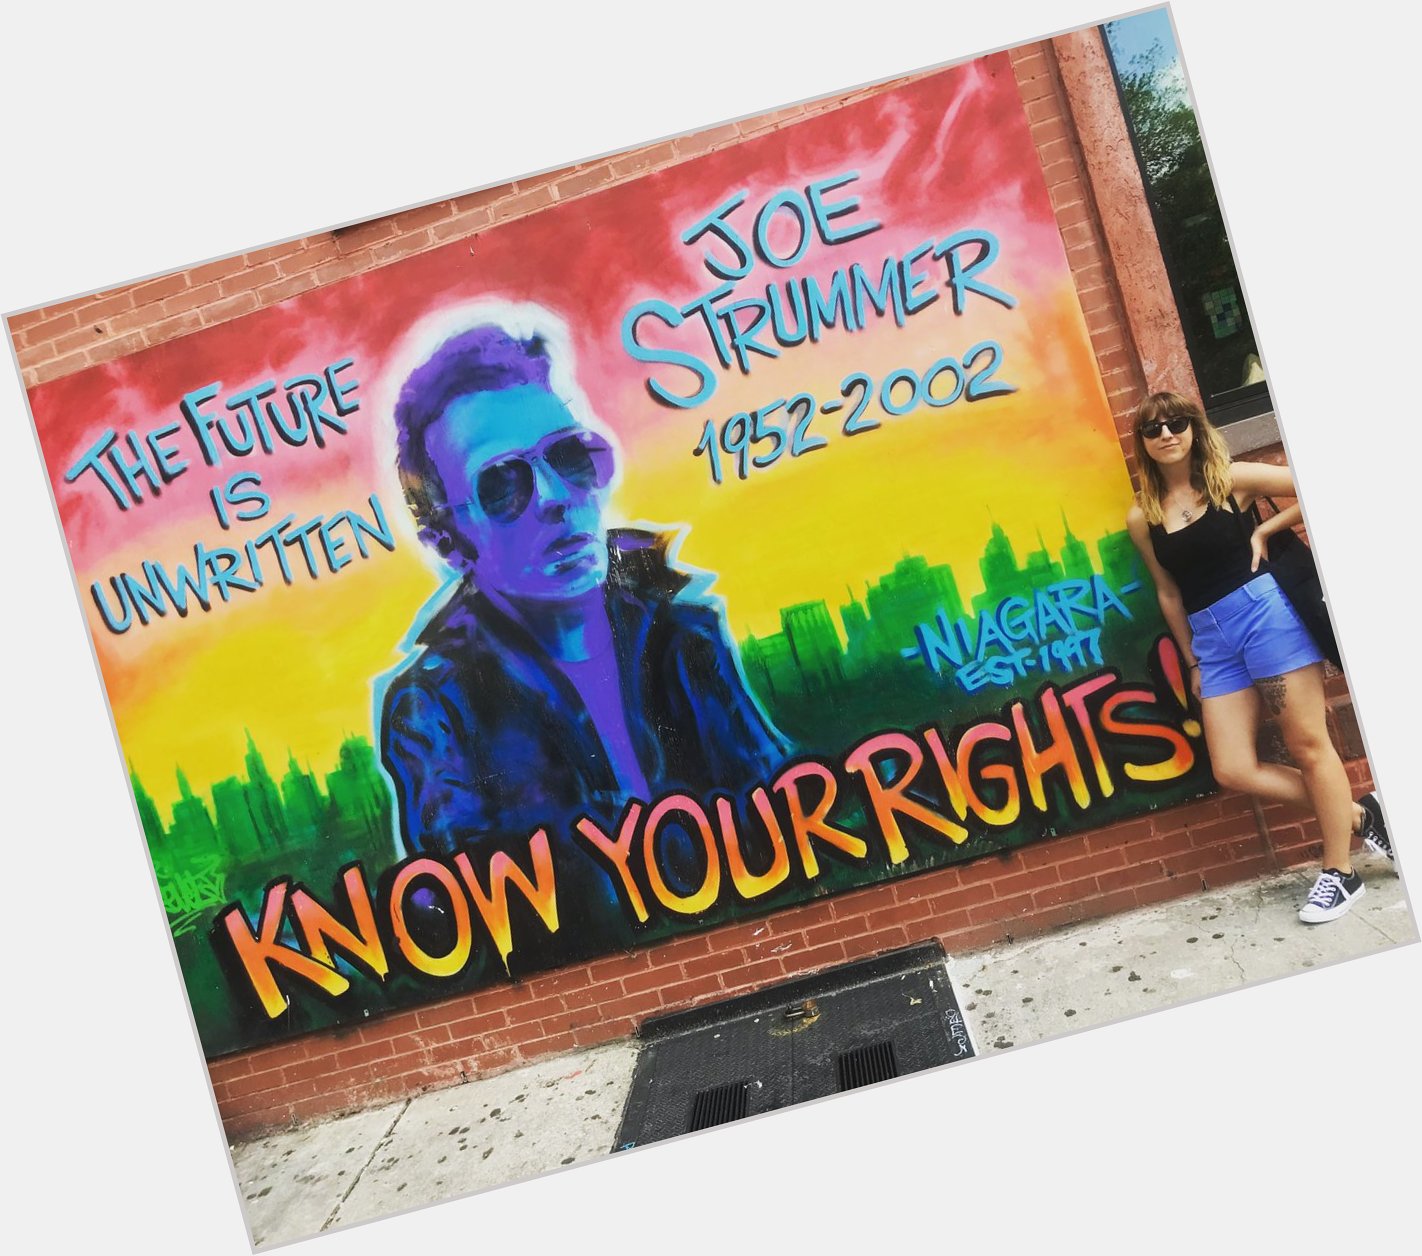 Happy Birthday, Joe Strummer. Know your rights, all three of them. 